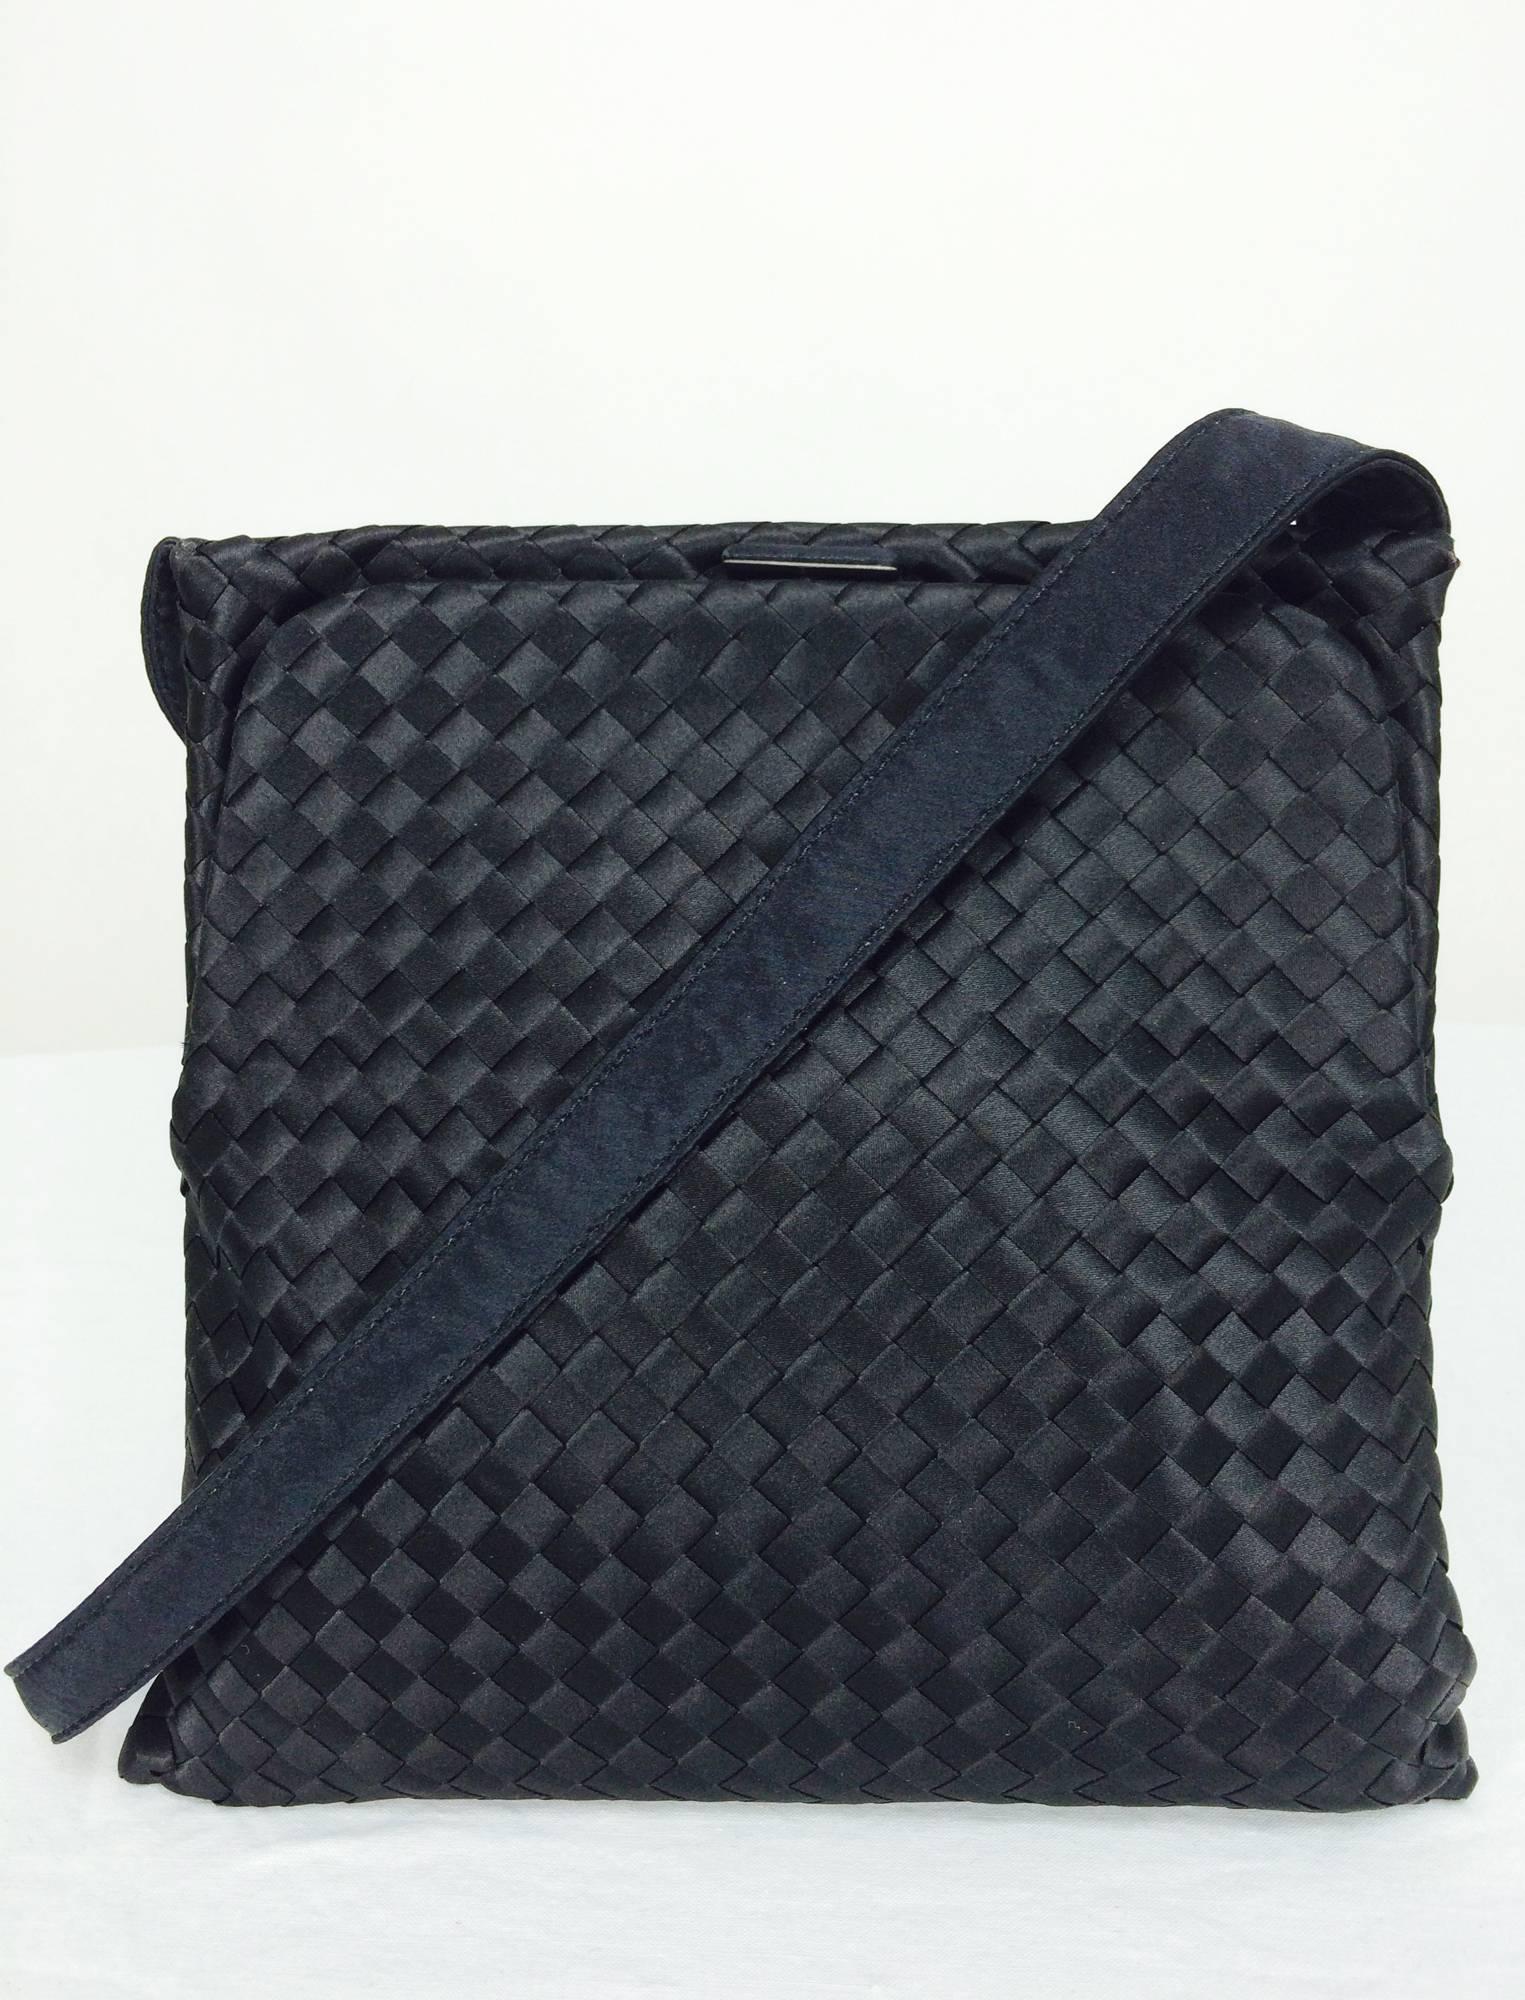 Women's Bottega Veneta black silk satin Intrecciato shoulder bag handbag 